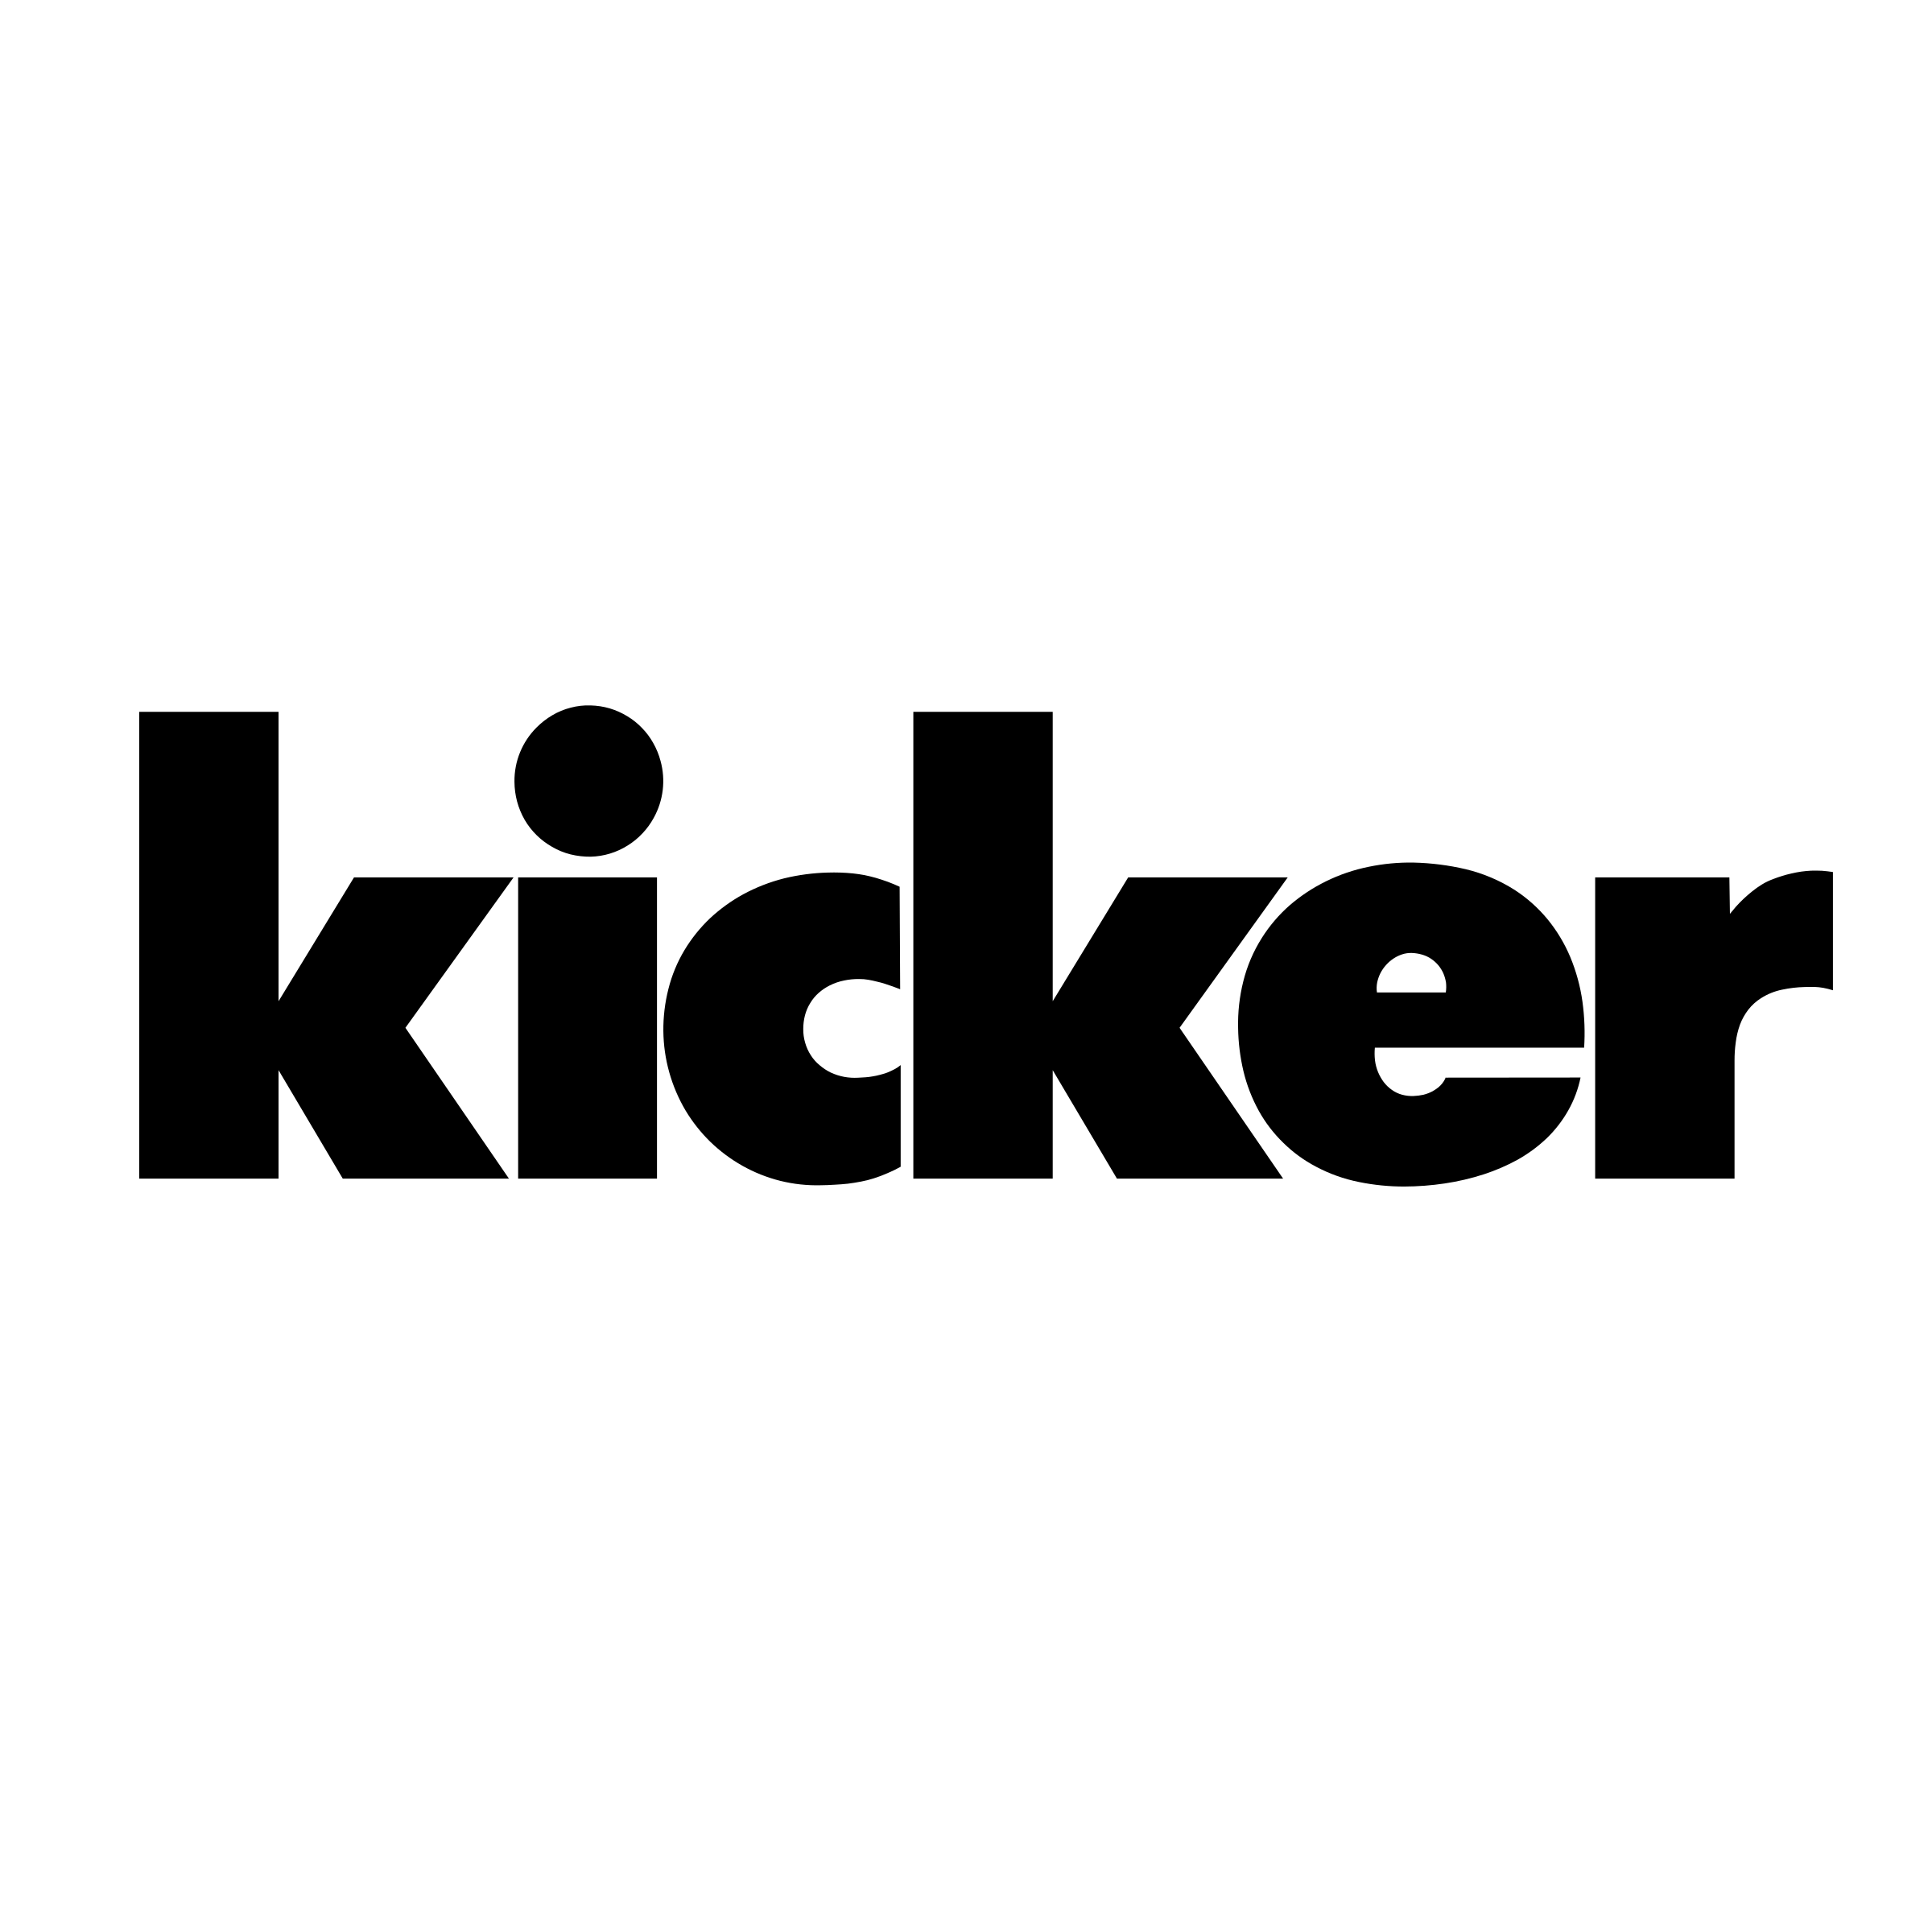 Kicker Logo - Kicker Logo PNG Transparent & SVG Vector - Freebie Supply